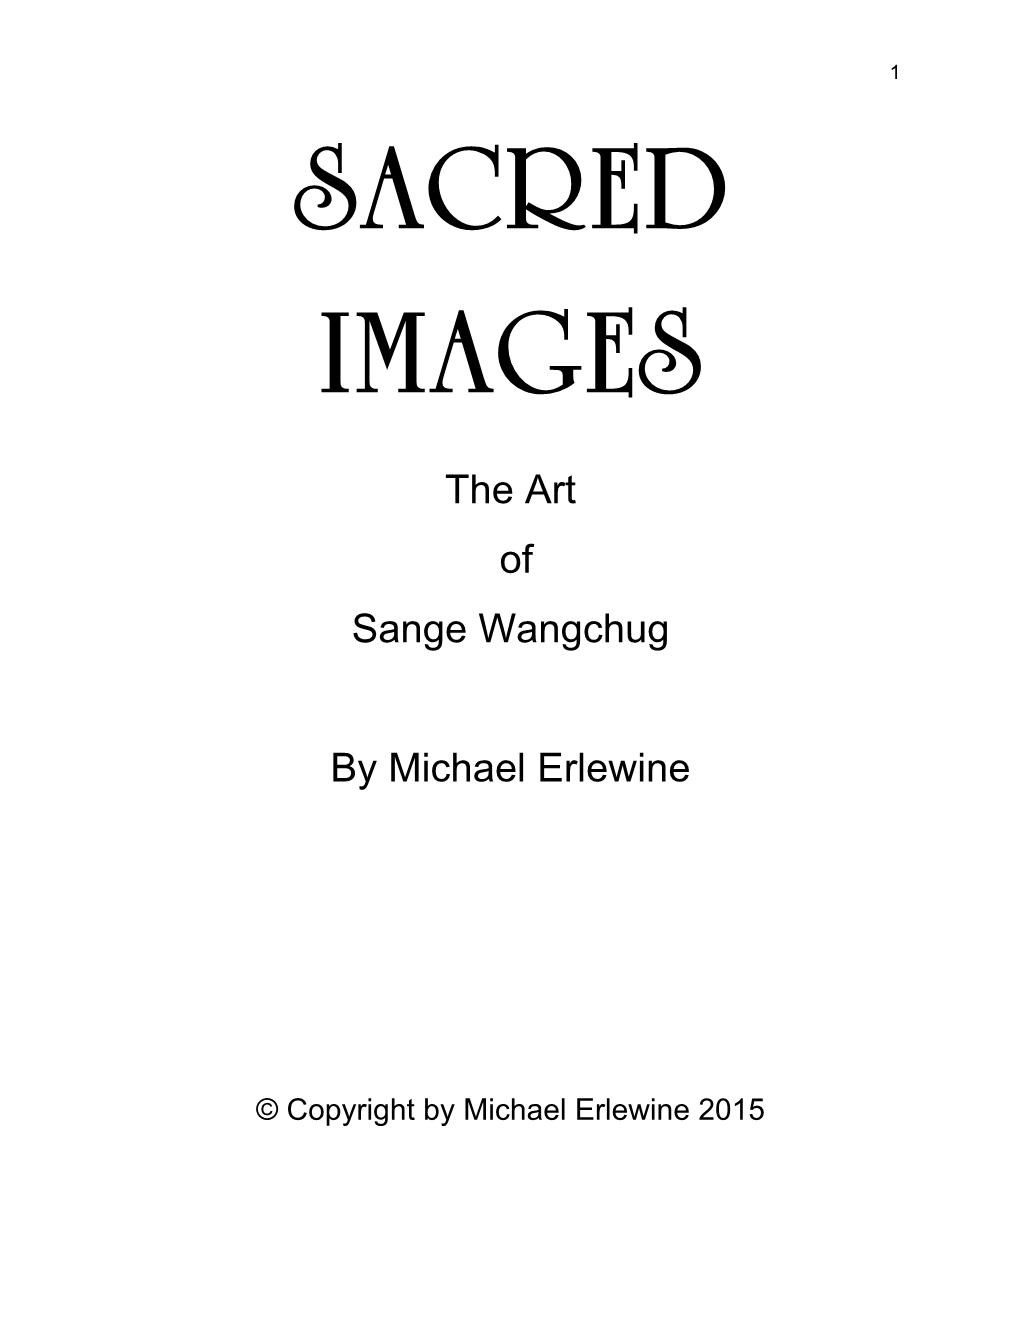 The Art of Sange Wangchug by Michael Erlewine